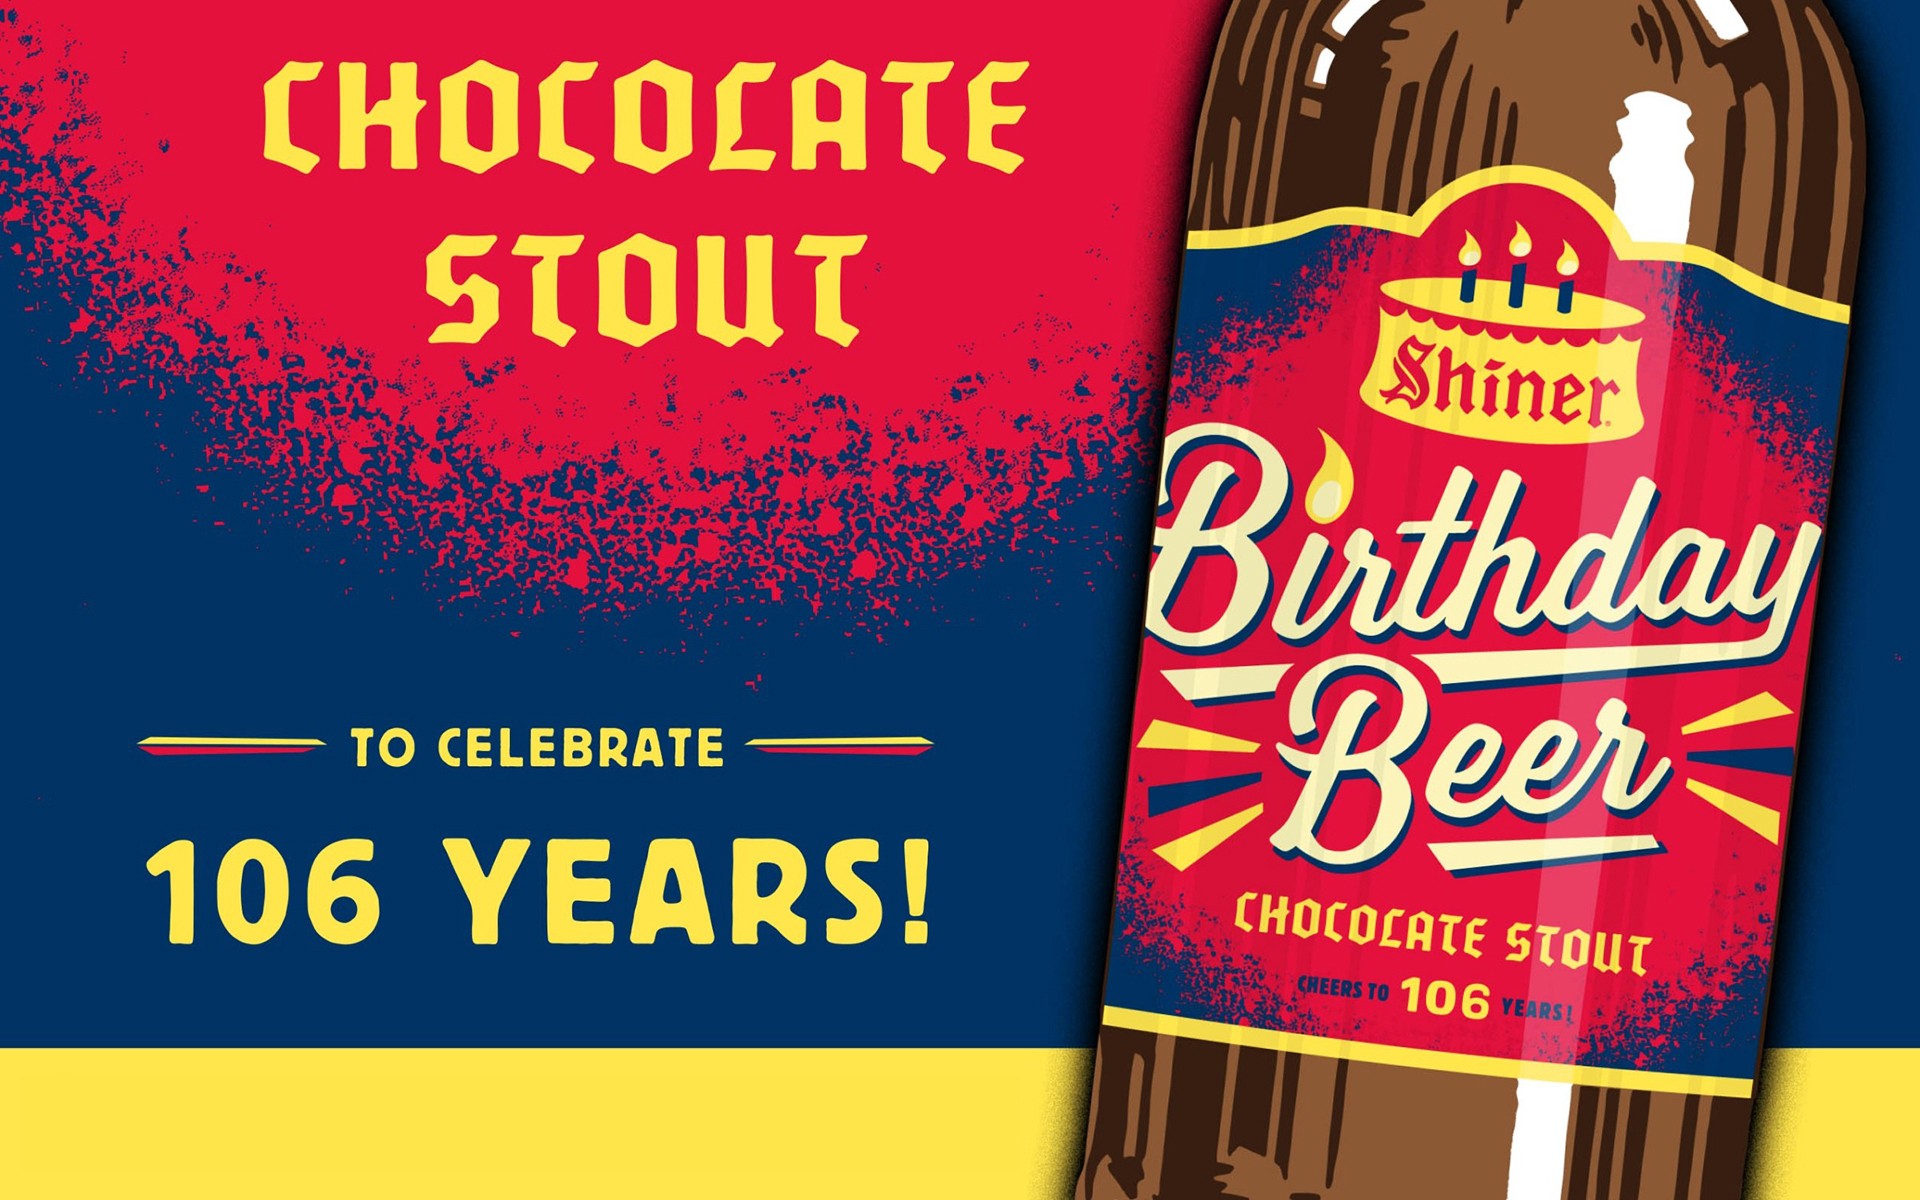 General 1920x1200 Shiner chocolate birthday digital art beer text drink celebrations cake